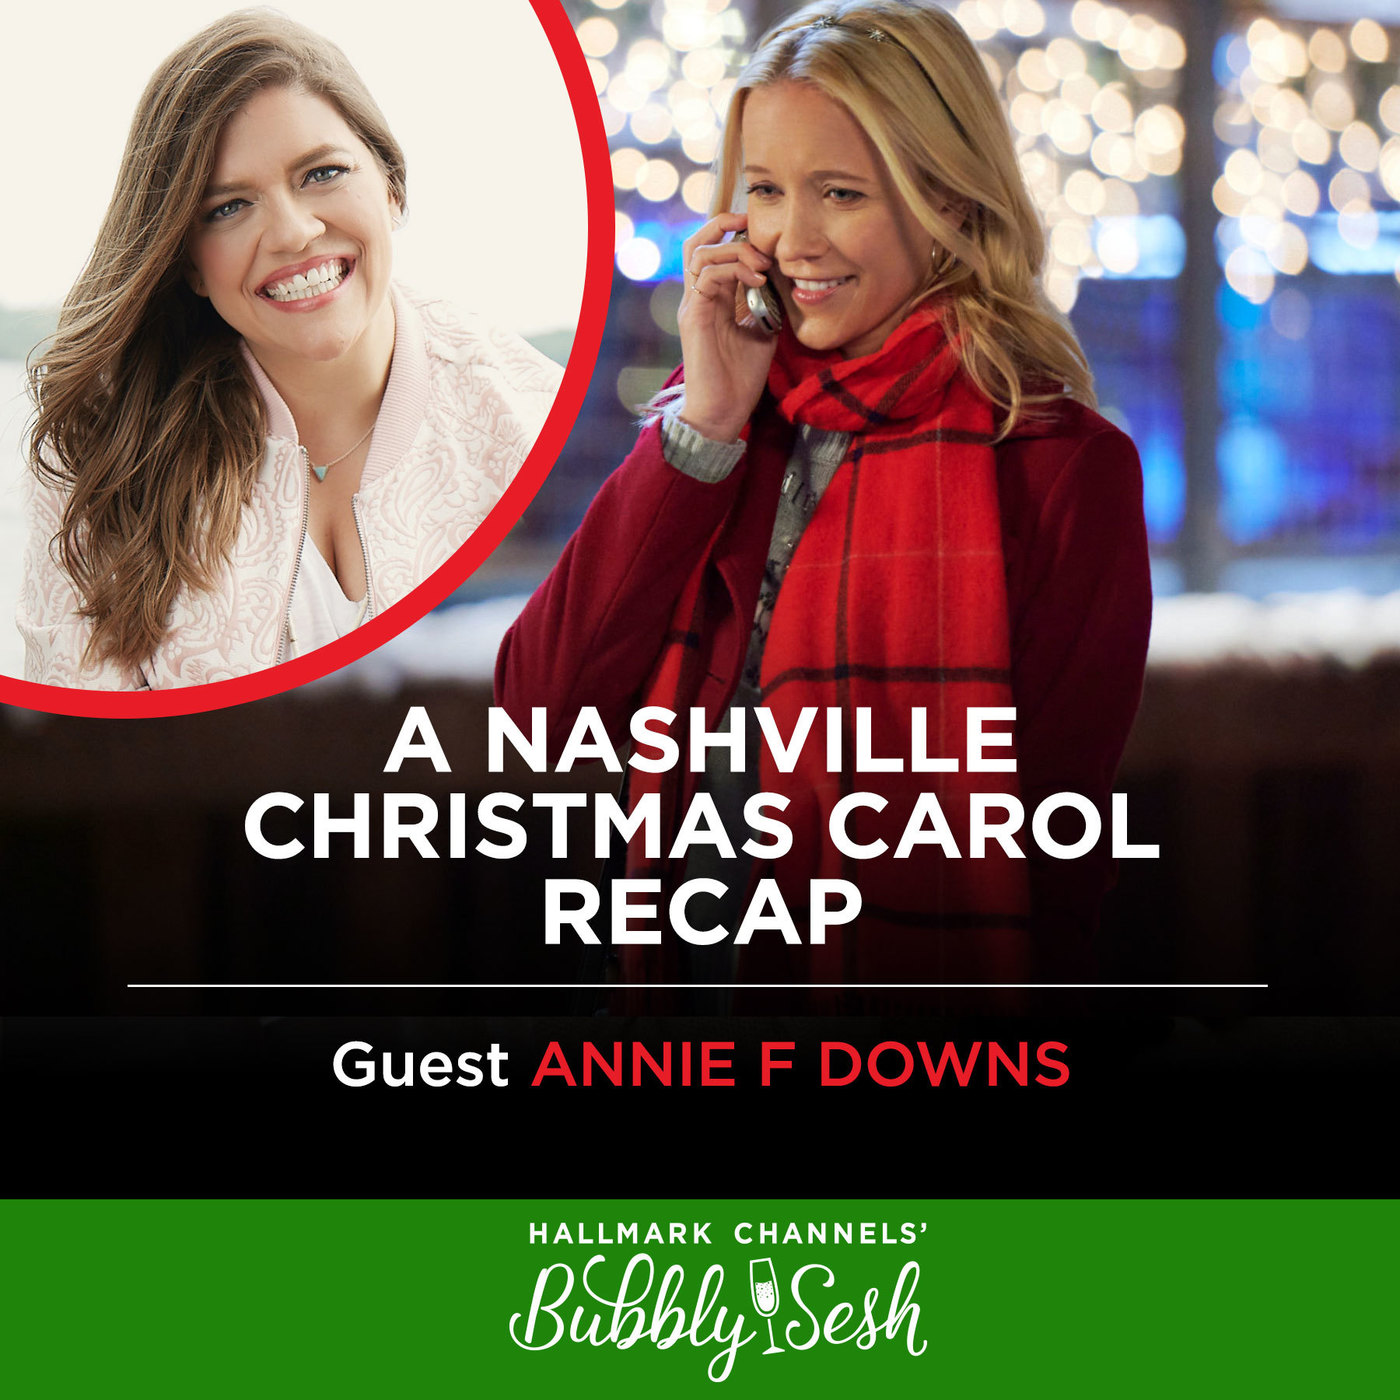 A Nashville Christmas Carol Recap with Guest Annie F. Downs